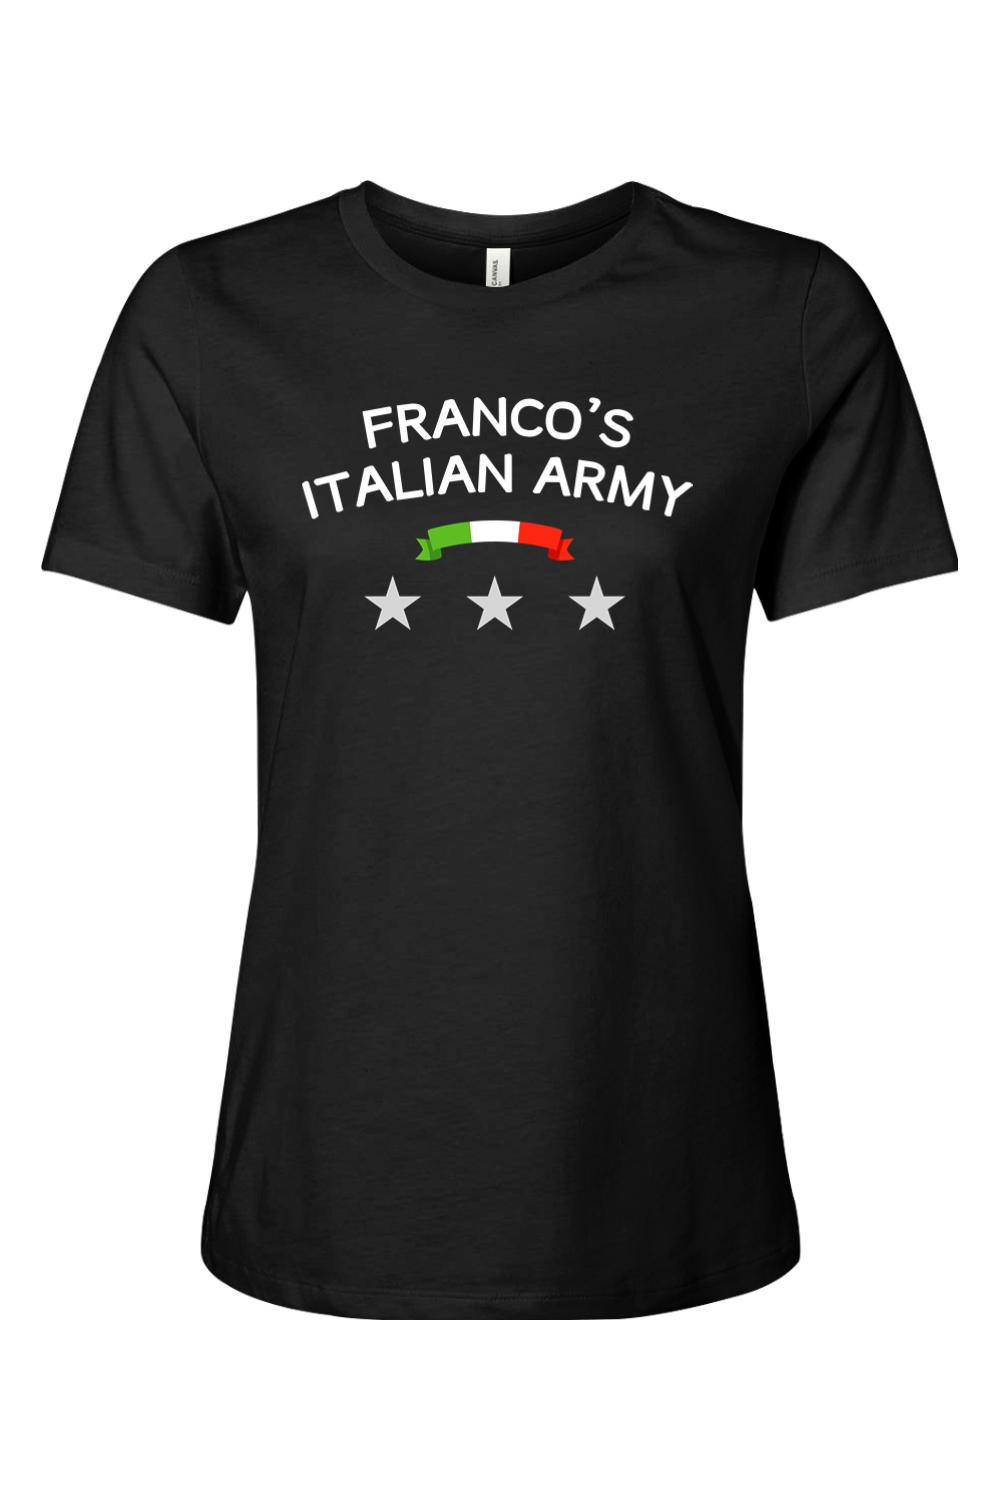 Franco's Italian Army - Ladies Tee - Yinzylvania